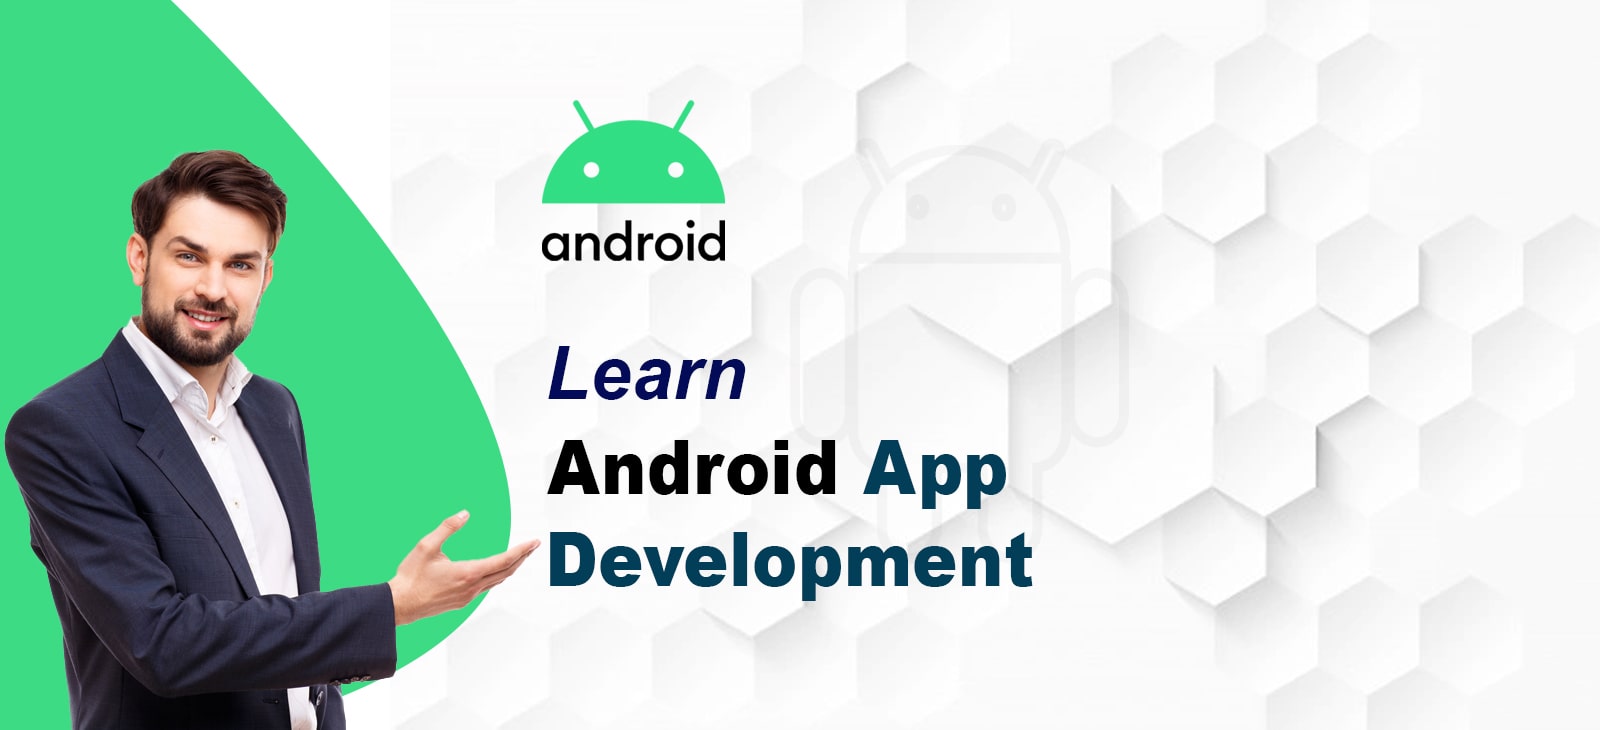 Android Training in Chandigarh Mohali Panchkula